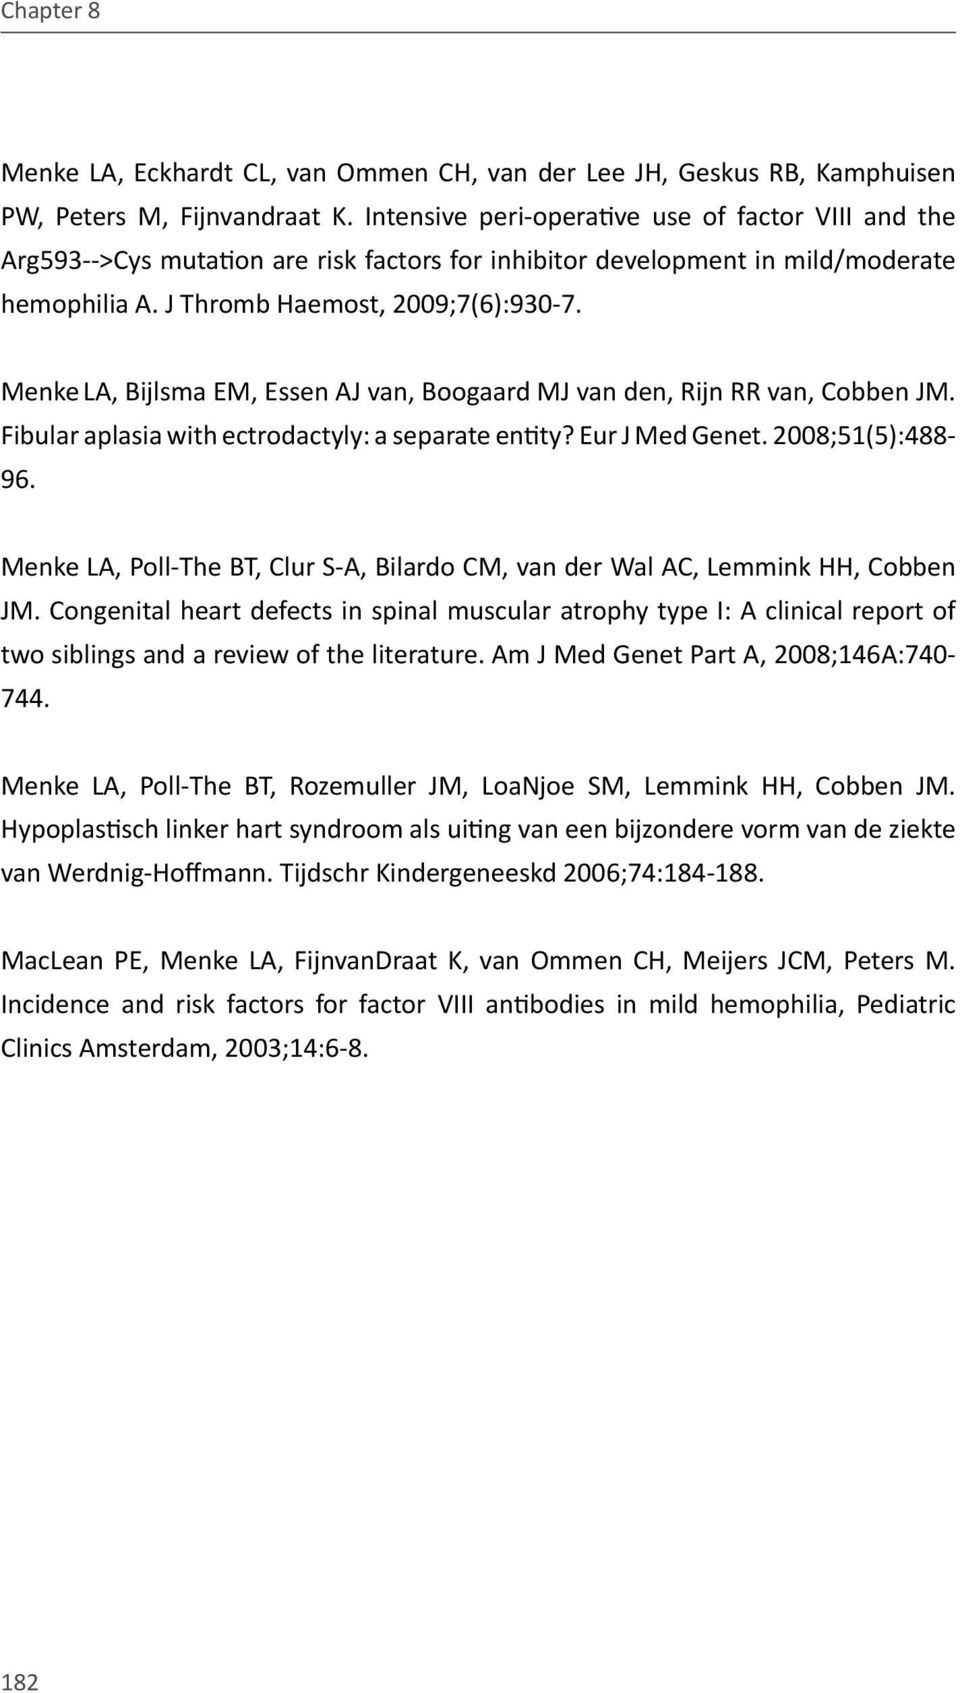 Menke LA, Bijlsma EM, Essen AJ van, Boogaard MJ van den, Rijn RR van, Cobben JM. Fibular aplasia with ectrodactyly: a separate entity? Eur J Med Genet. 2008;51(5):488-96.